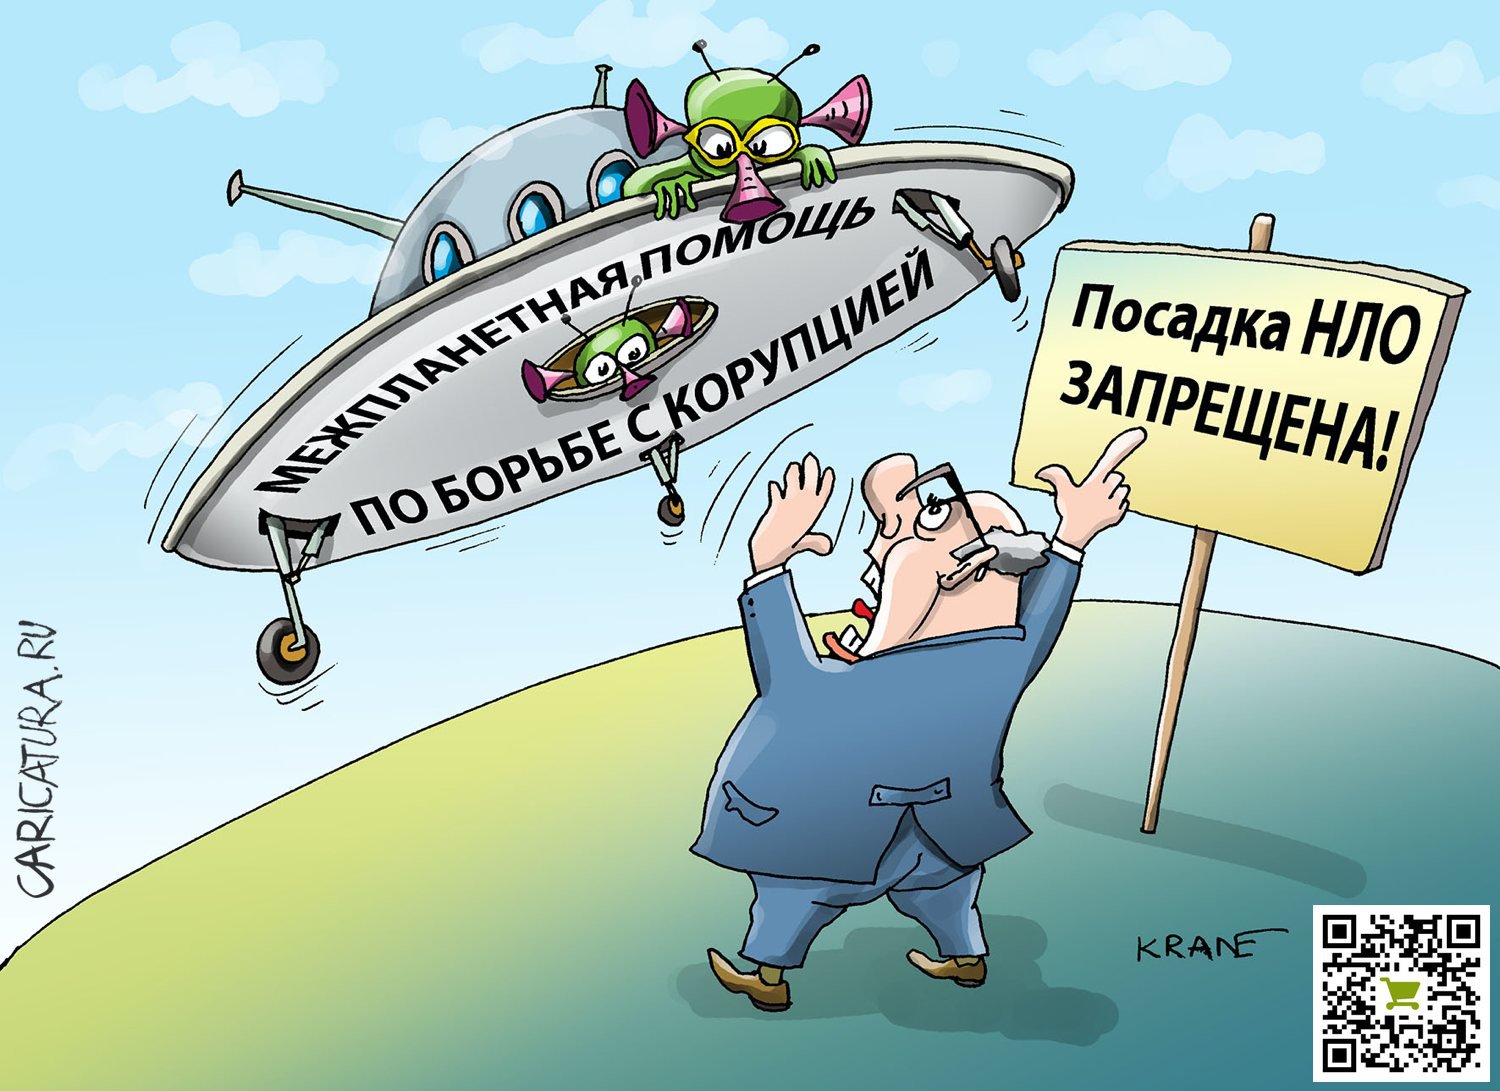 Карикатура "Гороху - для полноты эмоций", Евгений Кран